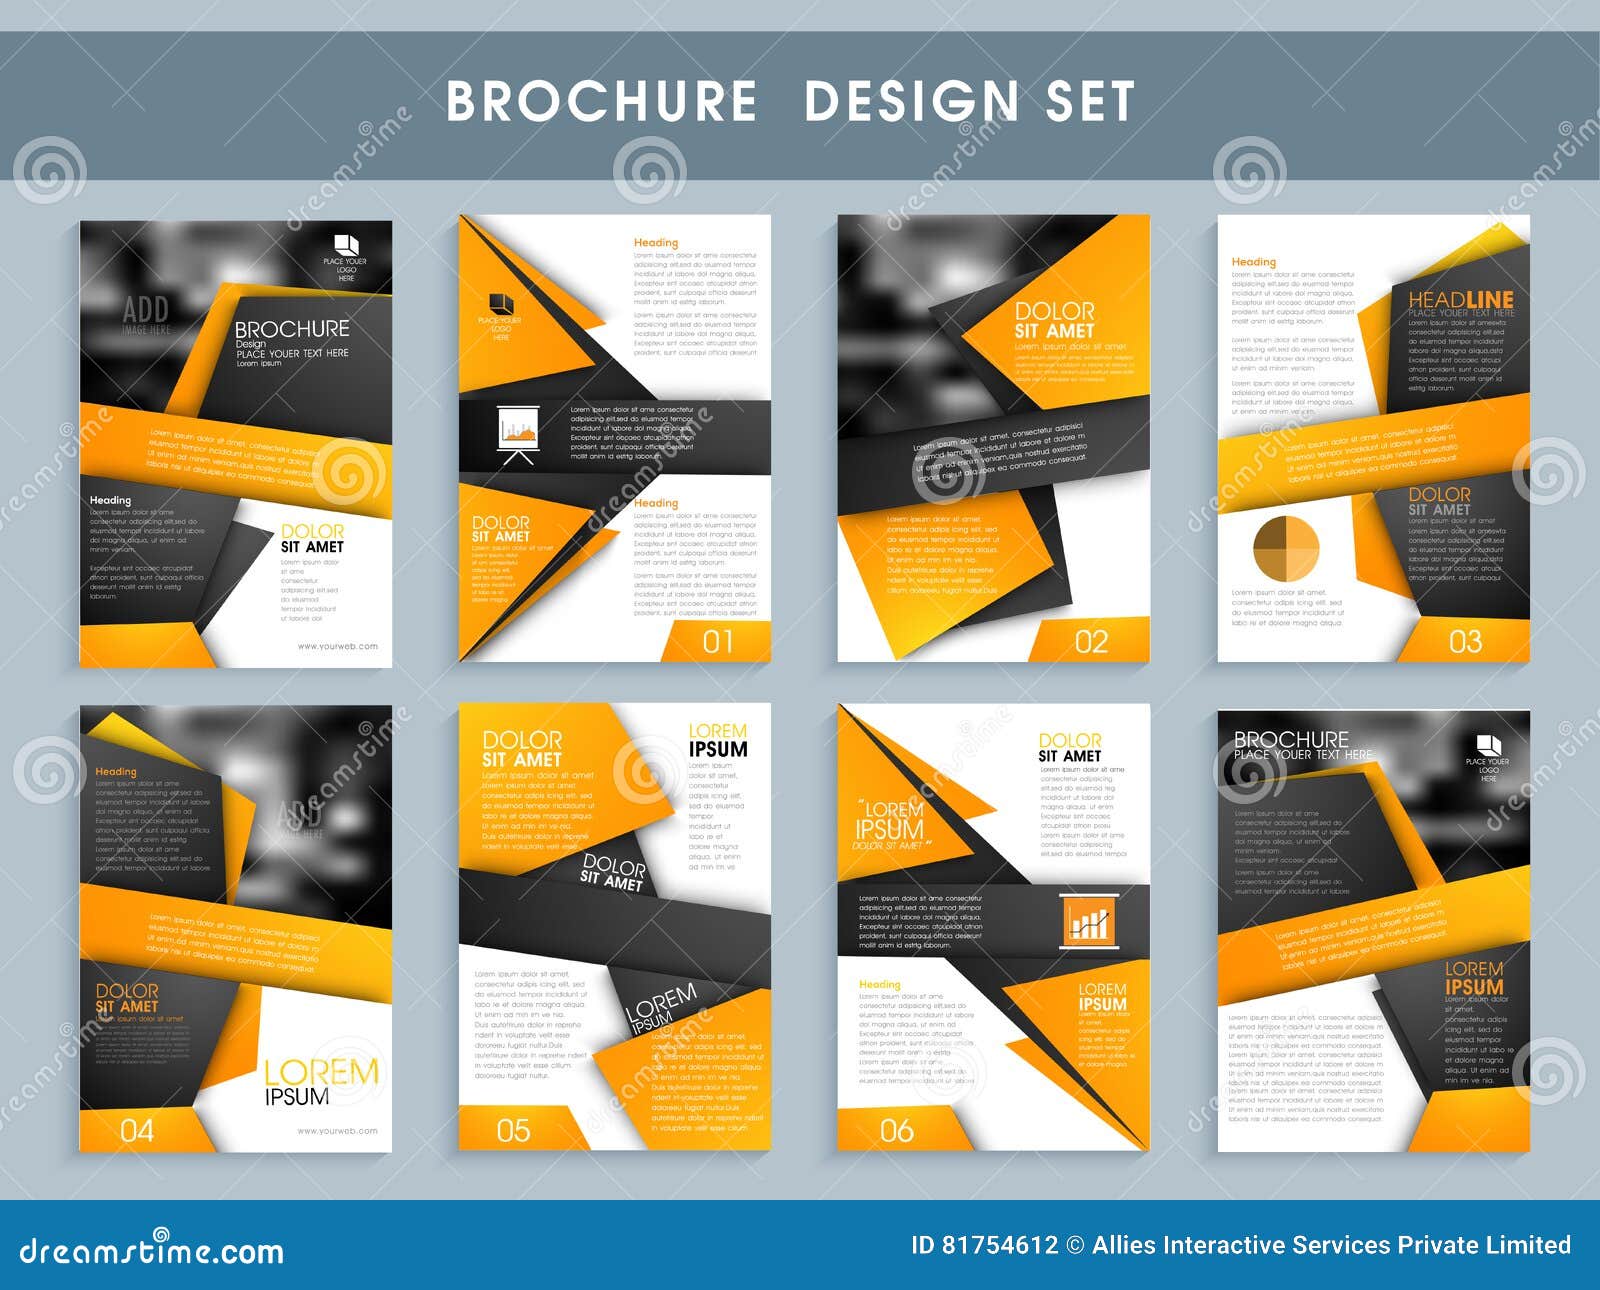 Creative Professional Brochure Design Set. Stock Illustration With Professional Brochure Design Templates